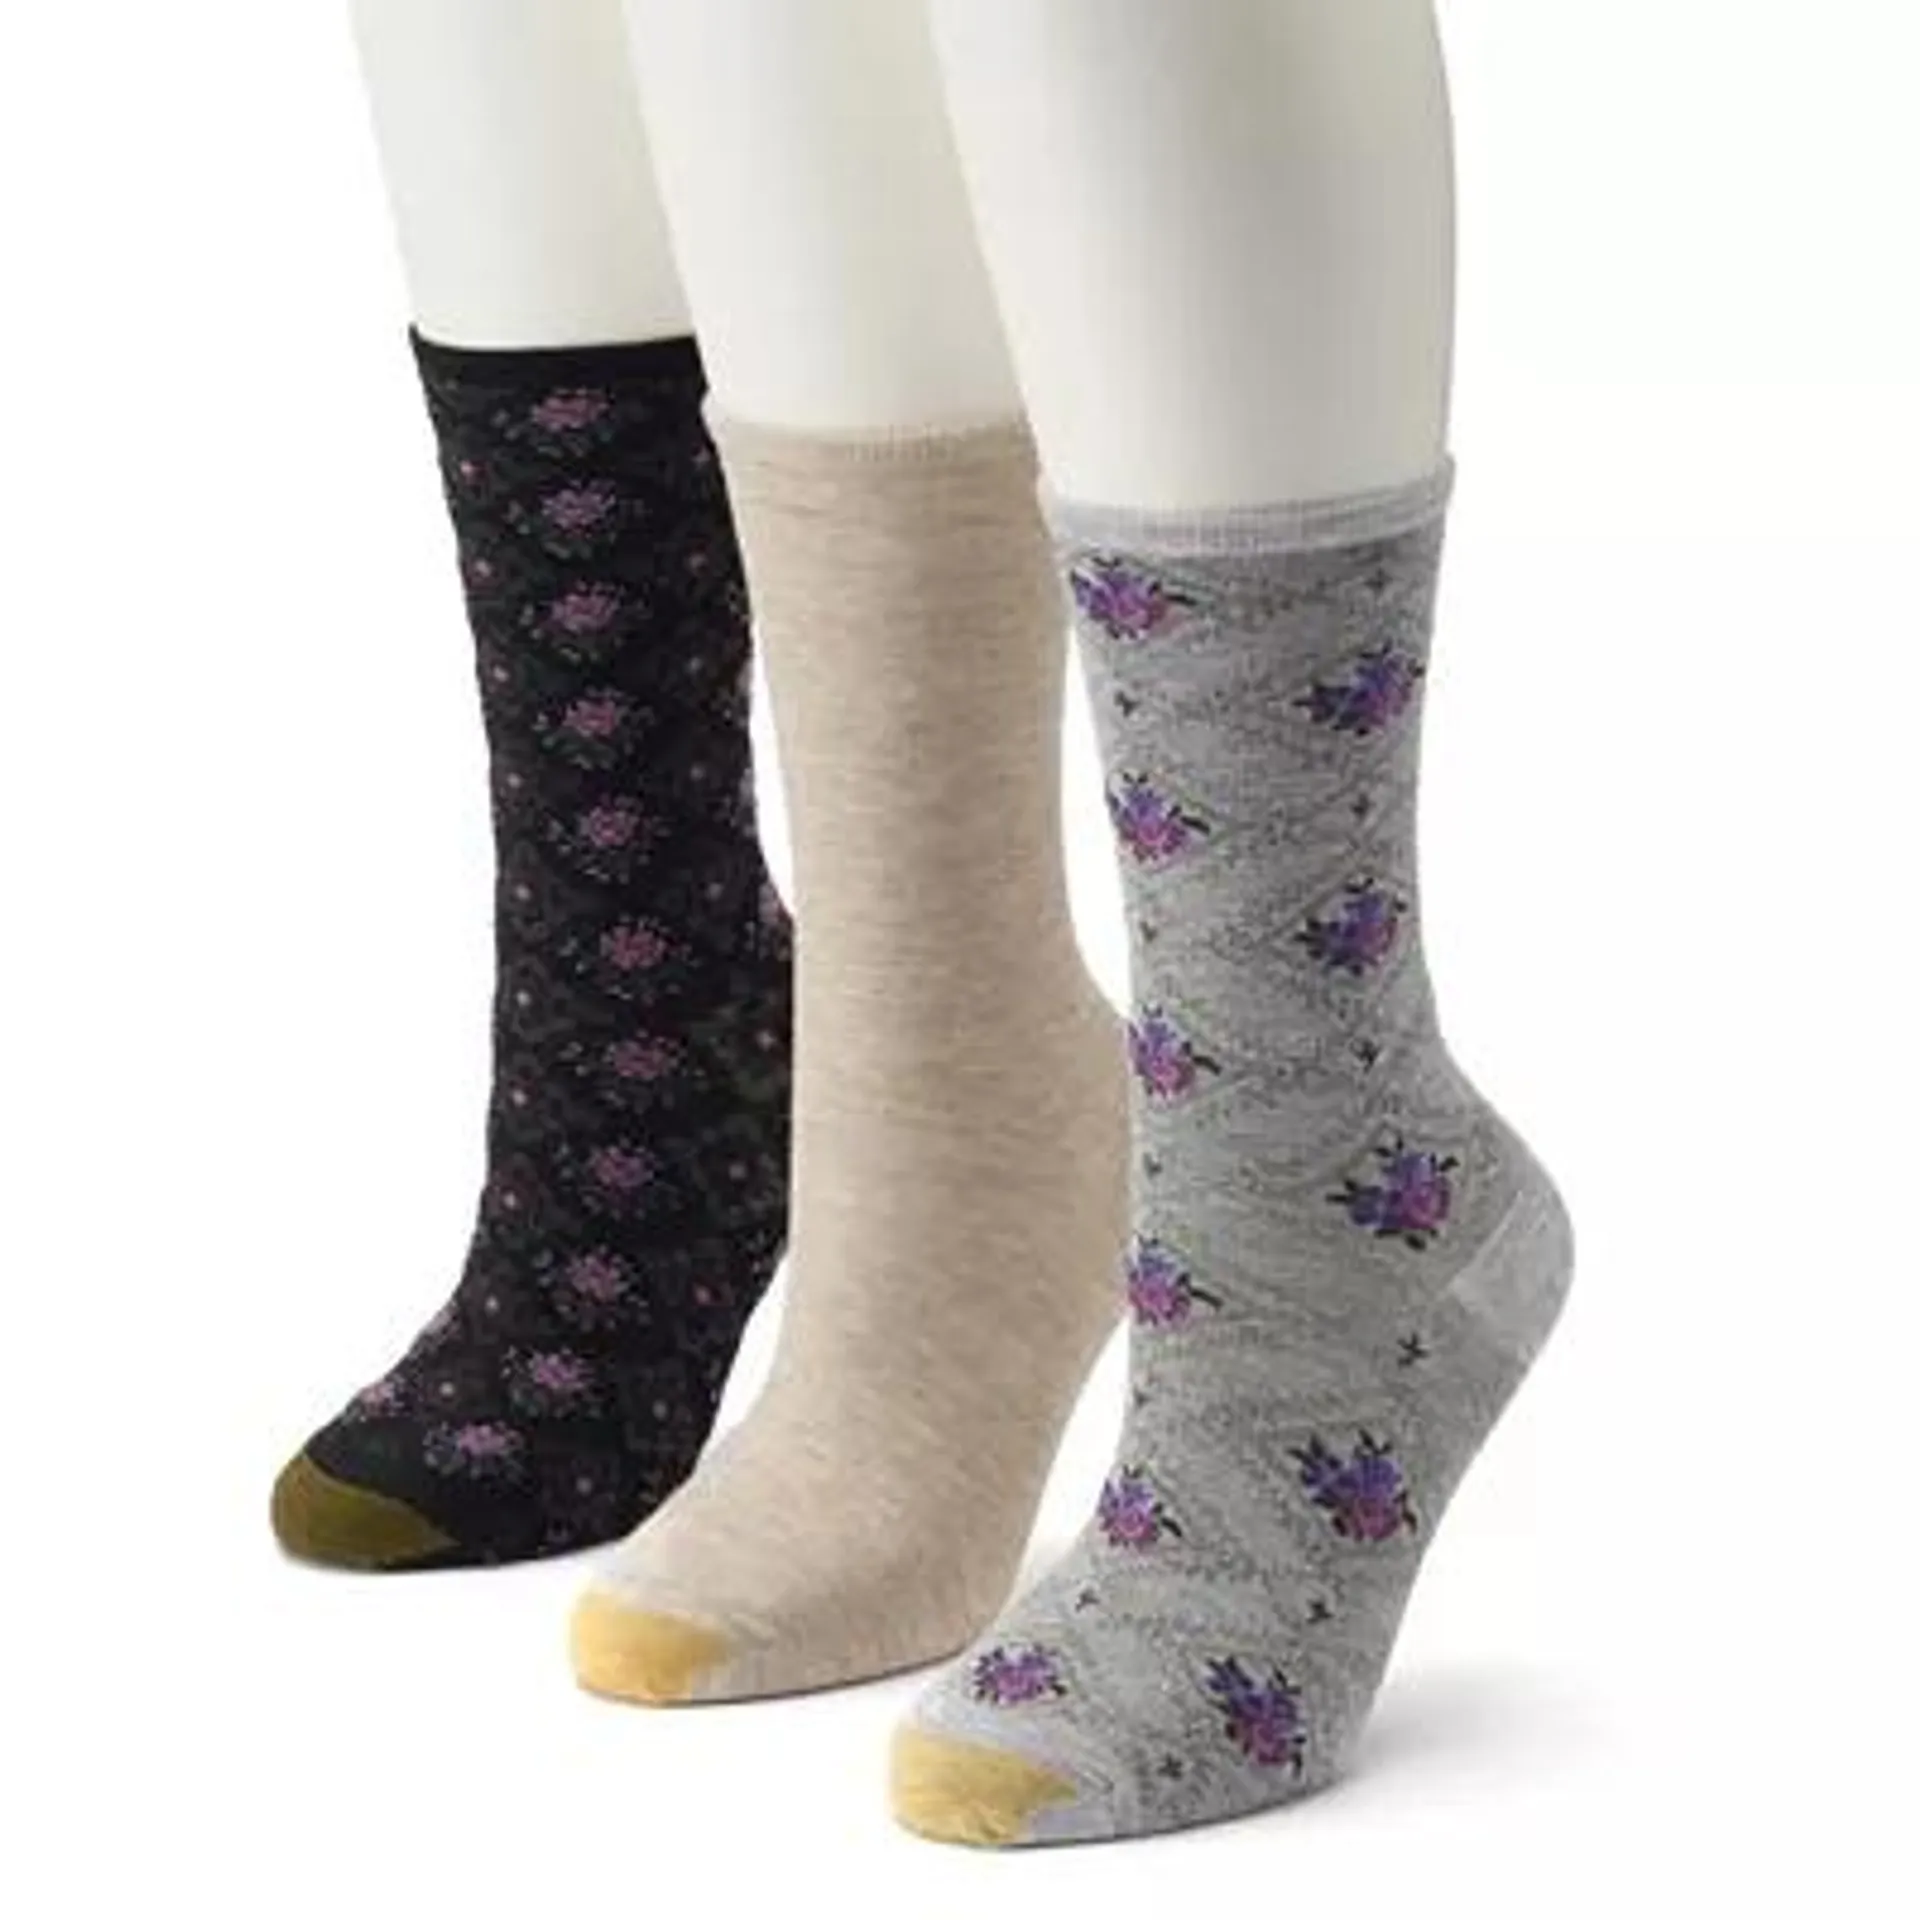 Women's GOLDTOE® 3-Pack Floral Crew Socks